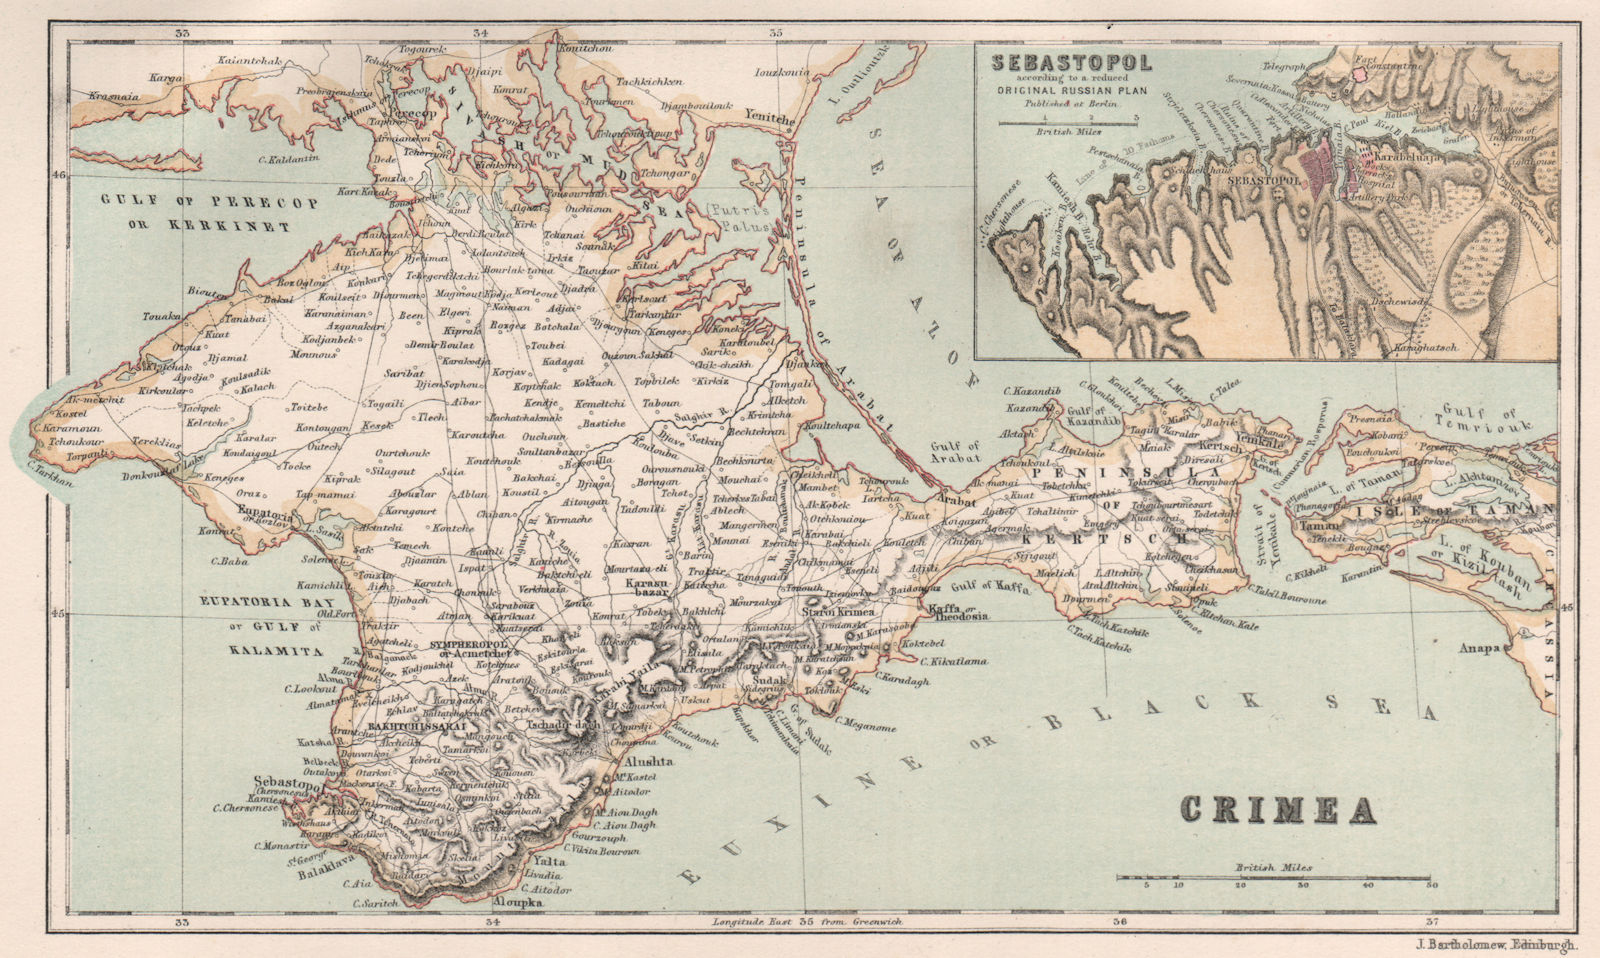 Crimea. Inset Sevastopol Sebastopol. Ukraine/Russia. BARTHOLOMEW 1886 old map